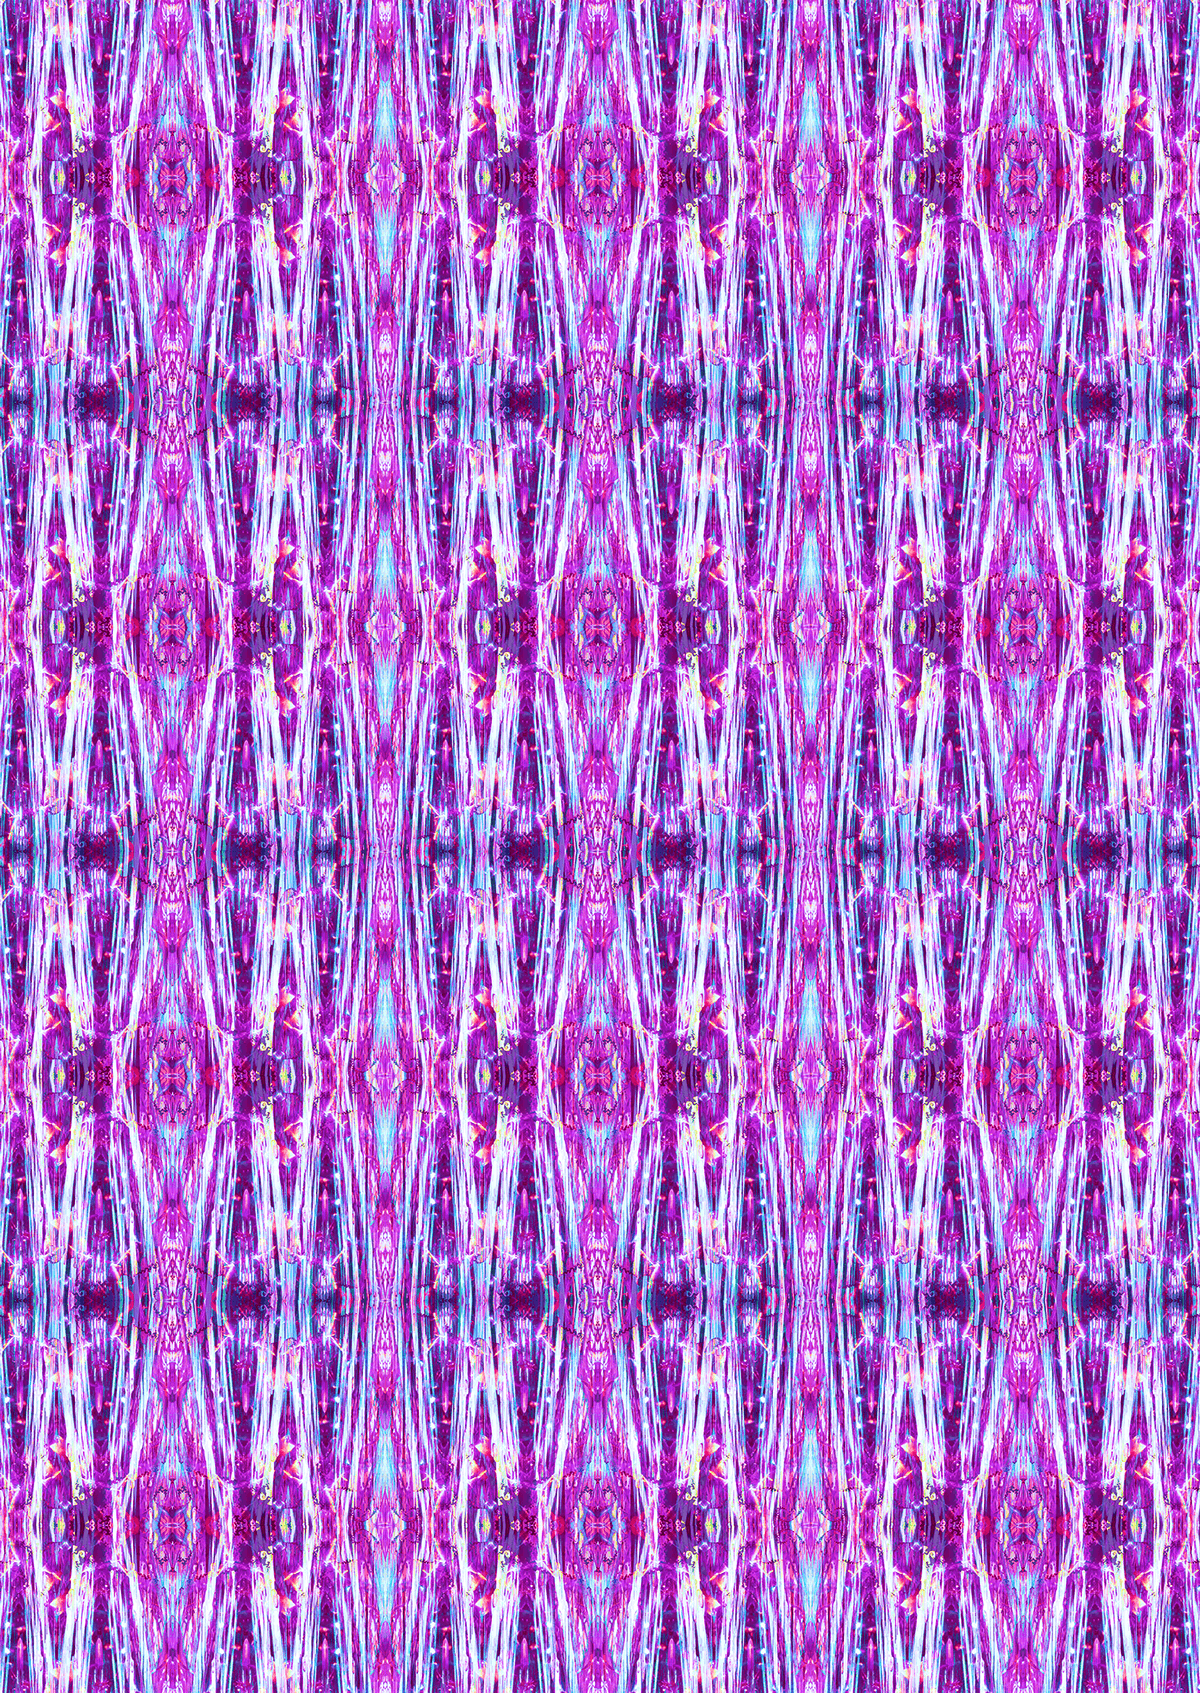 Visual Effects  Digital Art  fantasy artwork optical illusion psychedelic art ethereal pattern design  fractal architecture fractals